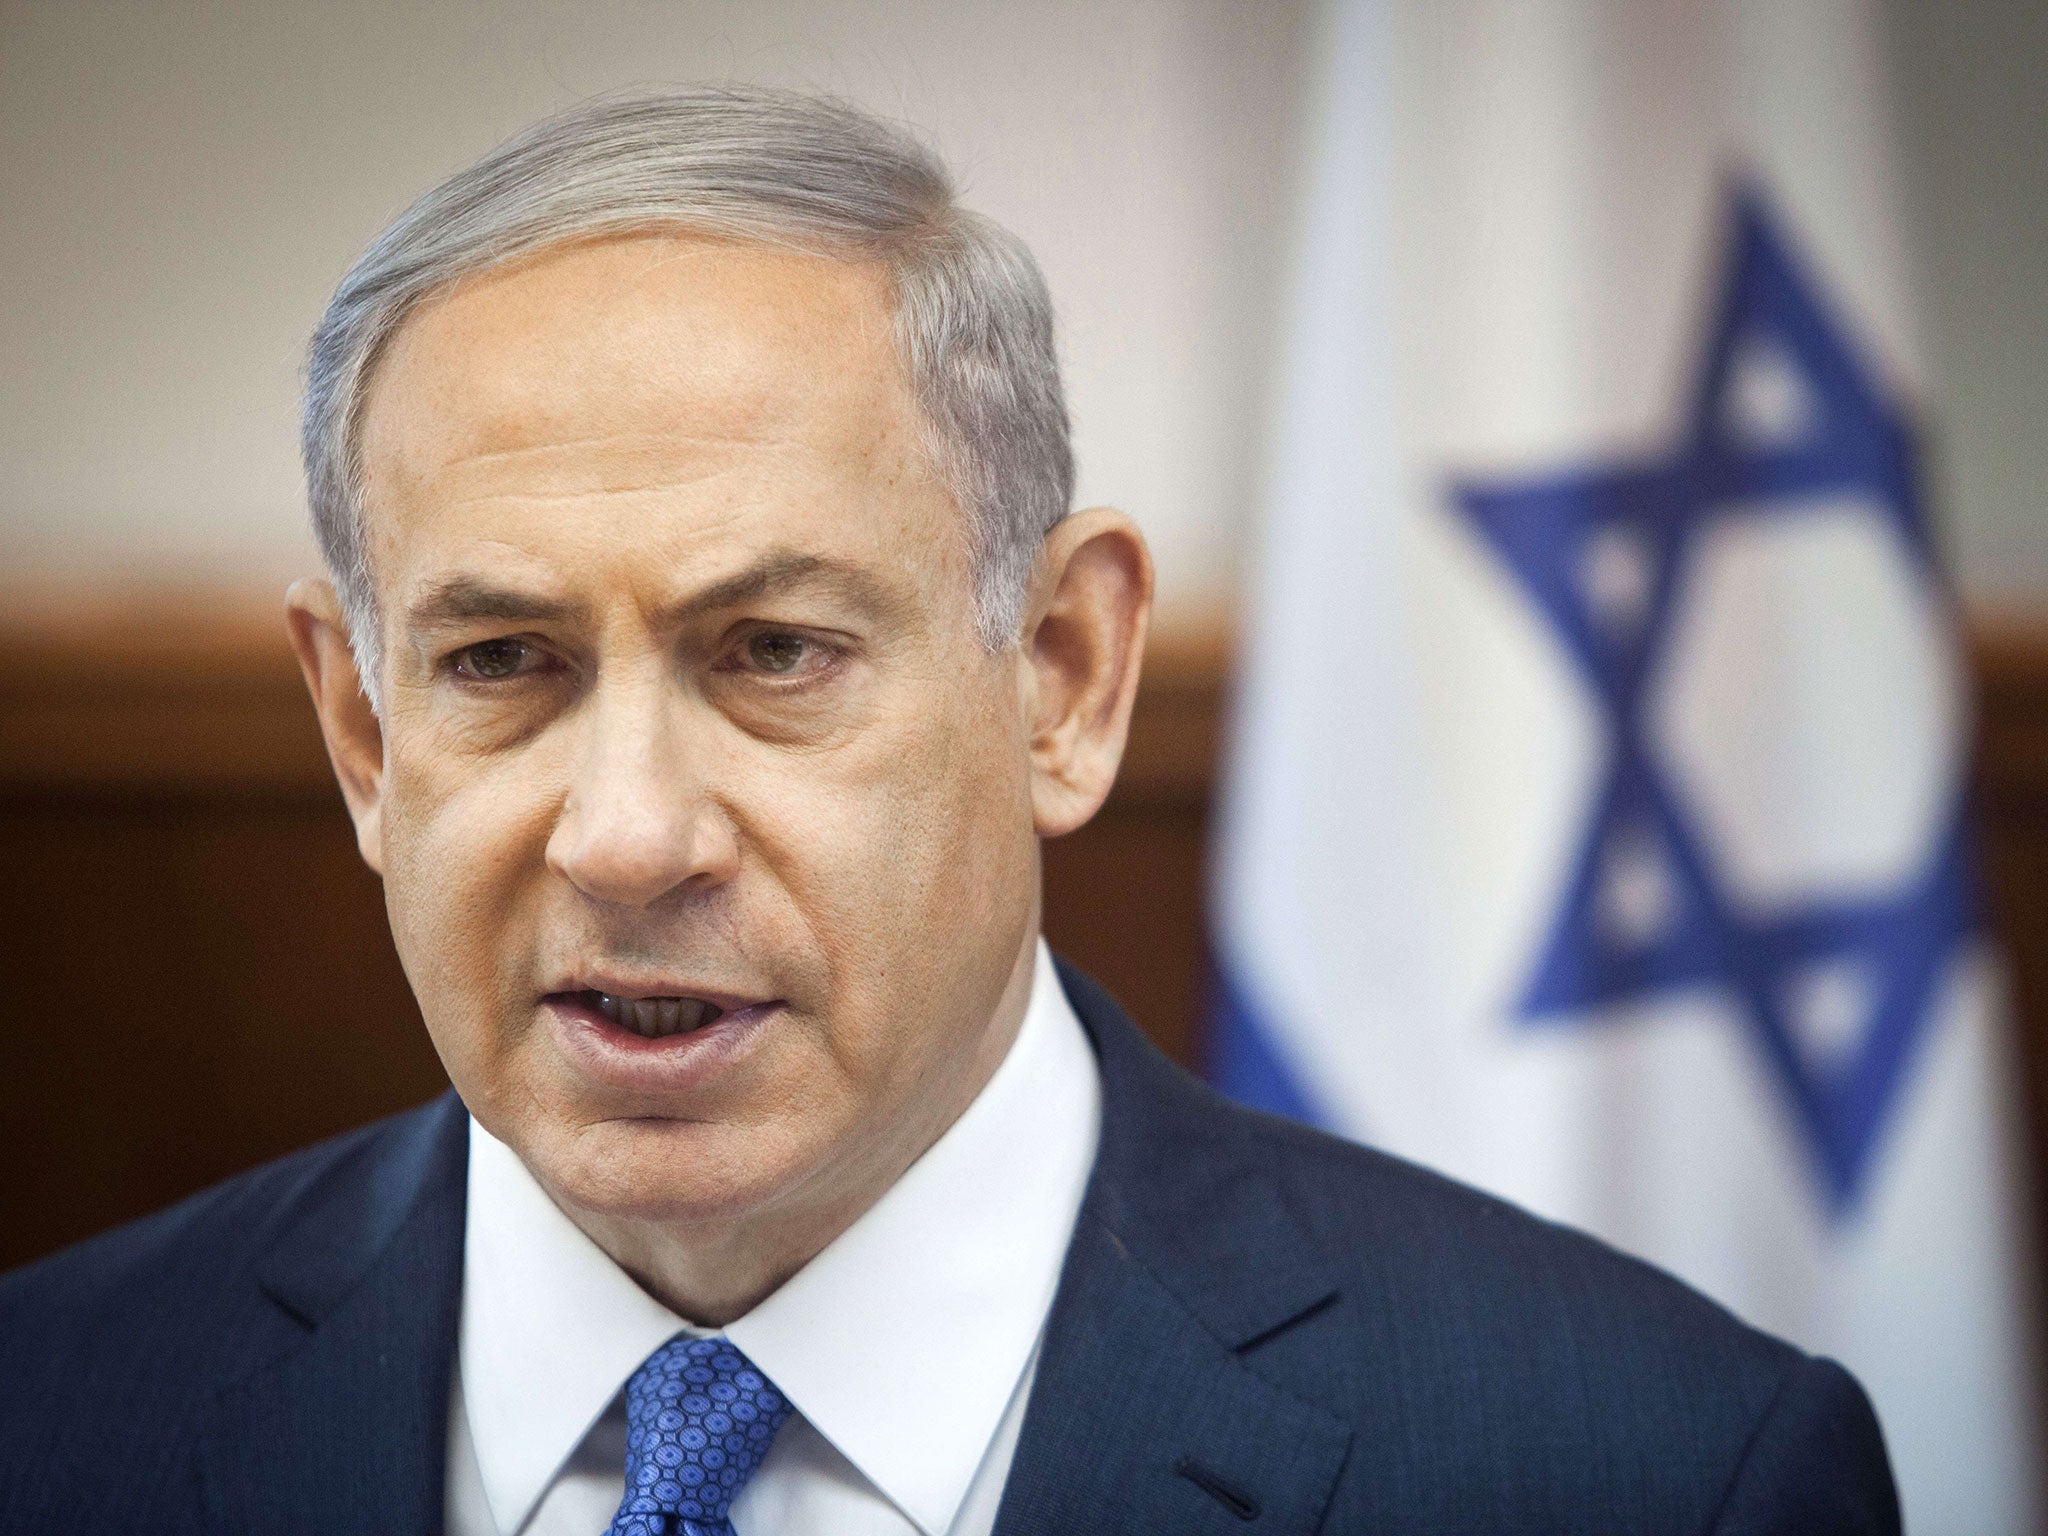 Benjamin Netanyahu threatened more bombings if the rocket attacks persisted